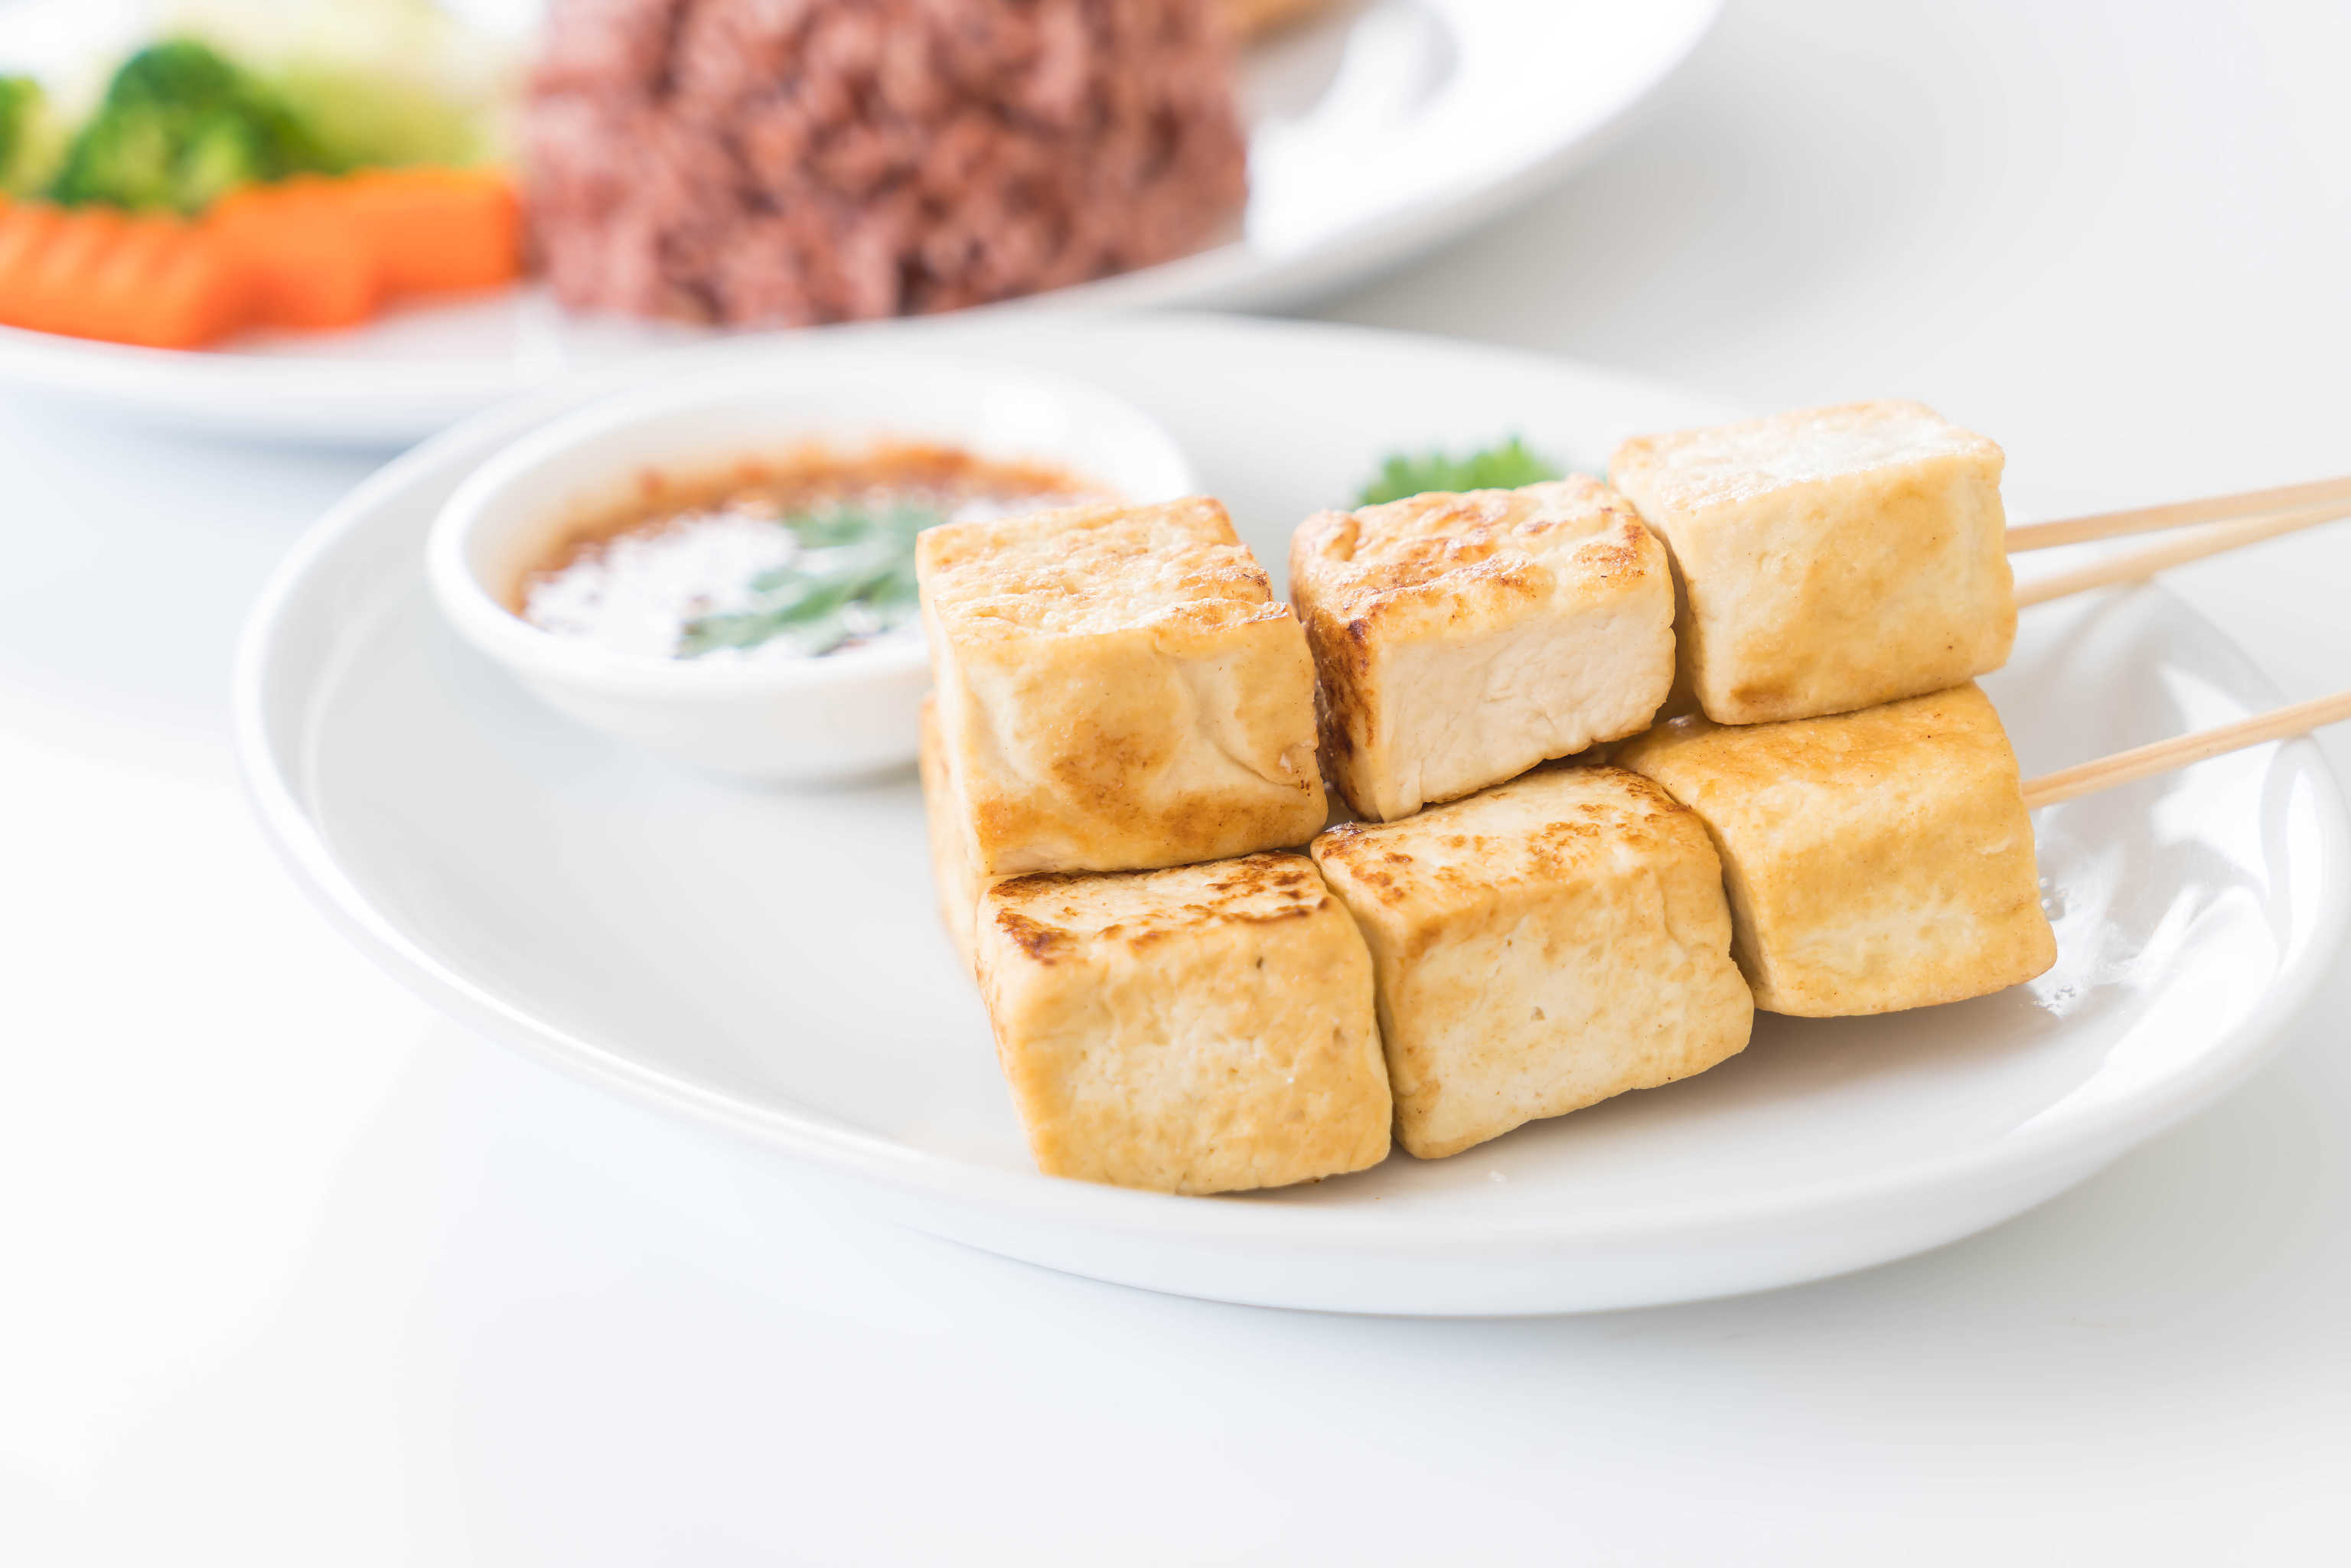 Perfekten Tofu Grillen: Dein Guide für leckeren Tofu